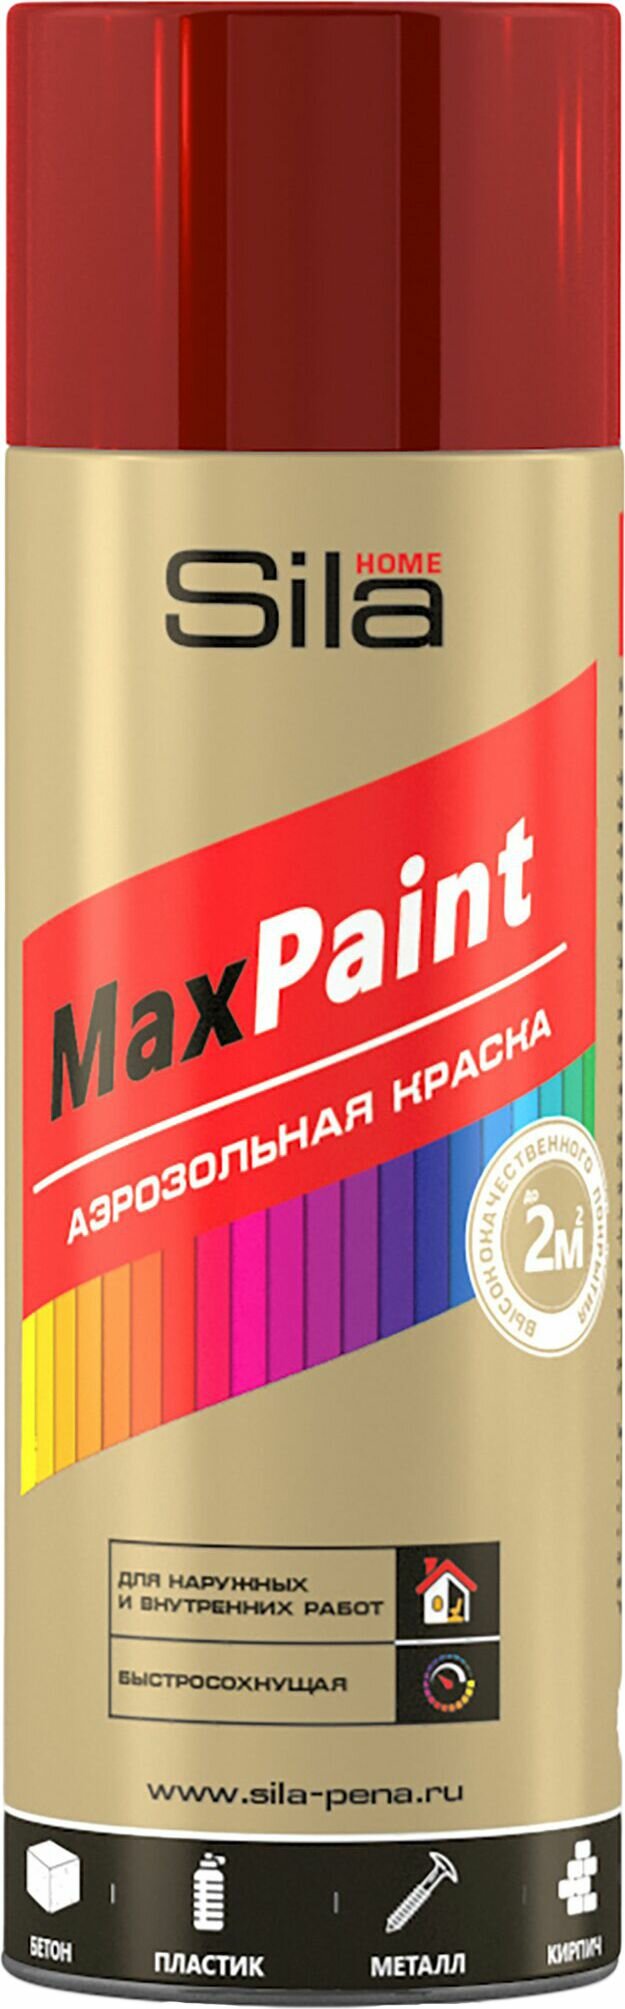   Sila Home MaxPaint    0,52 